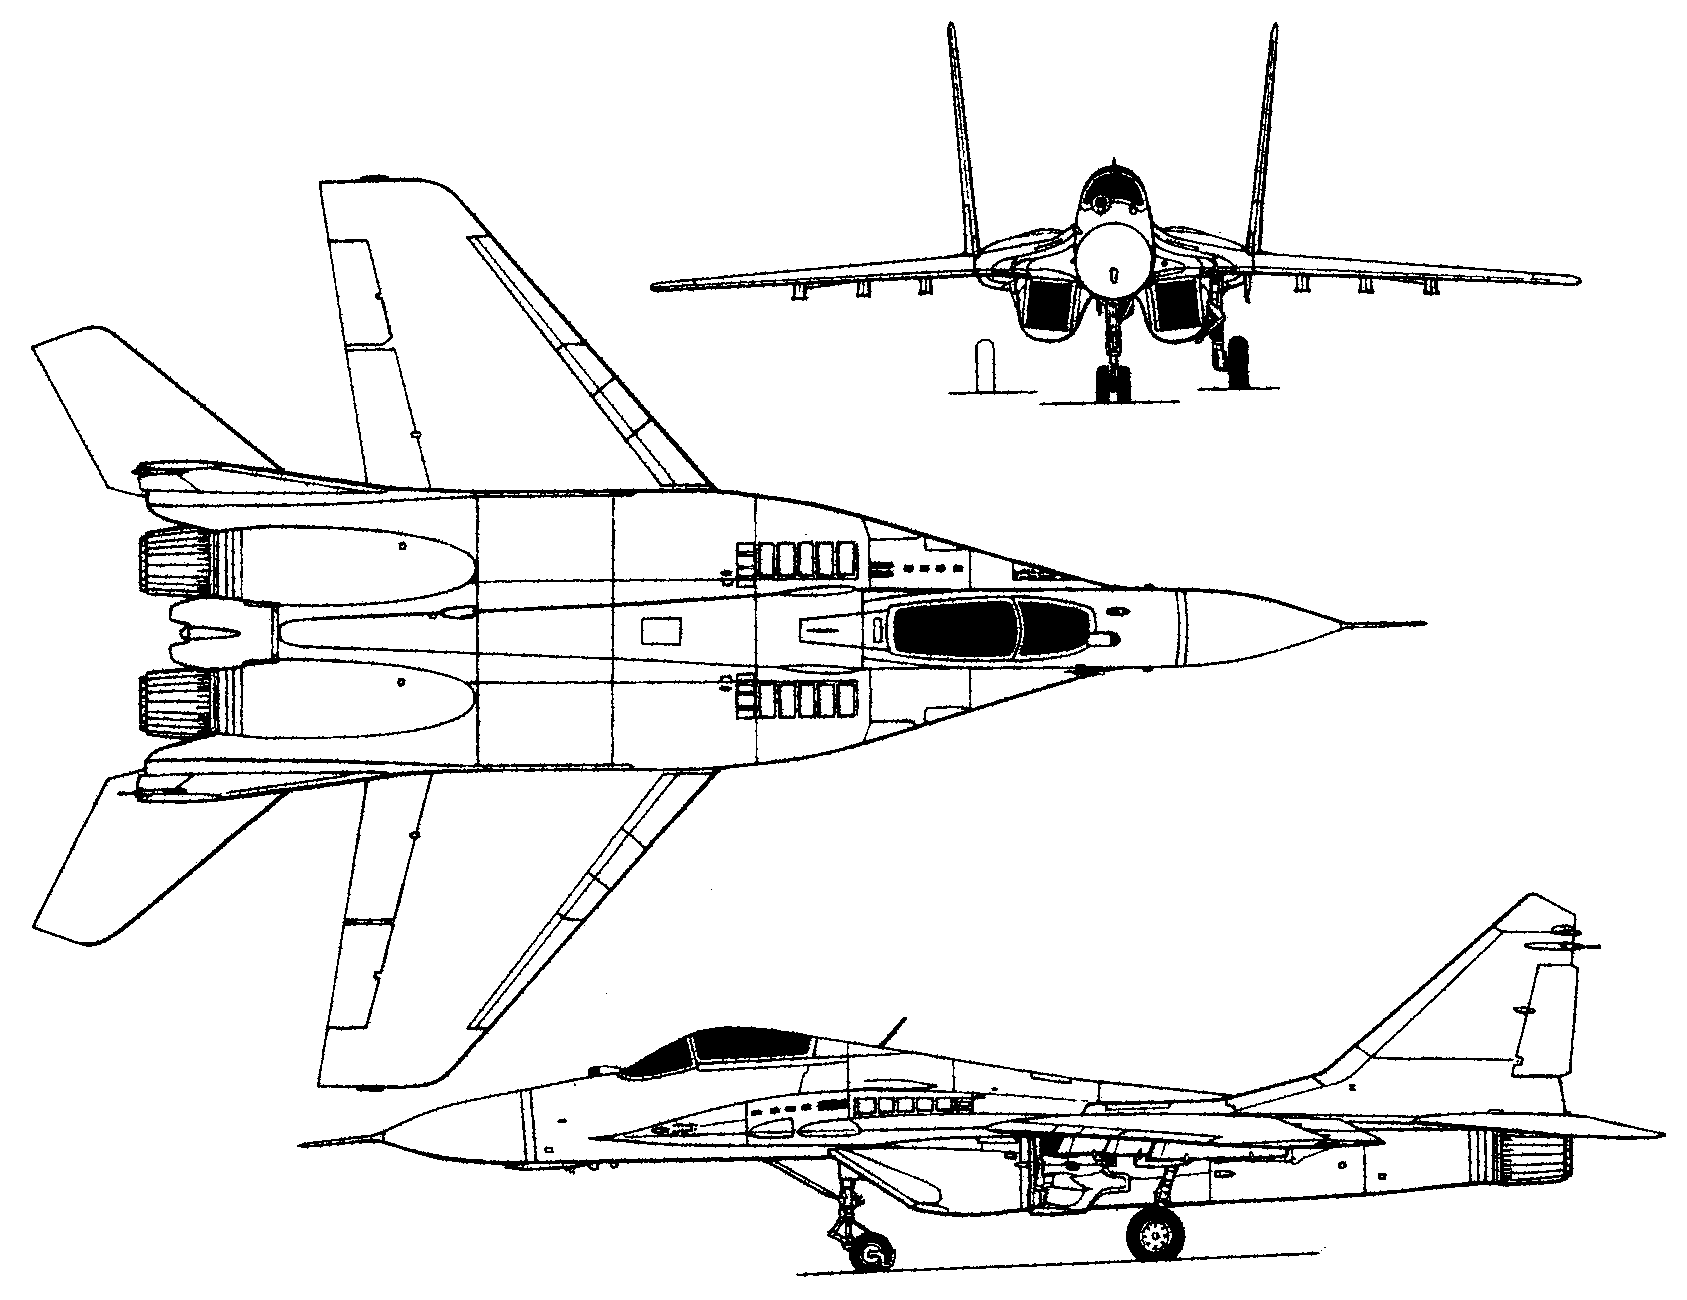 Mikoyan/Gurevich MiG-29 - fighter